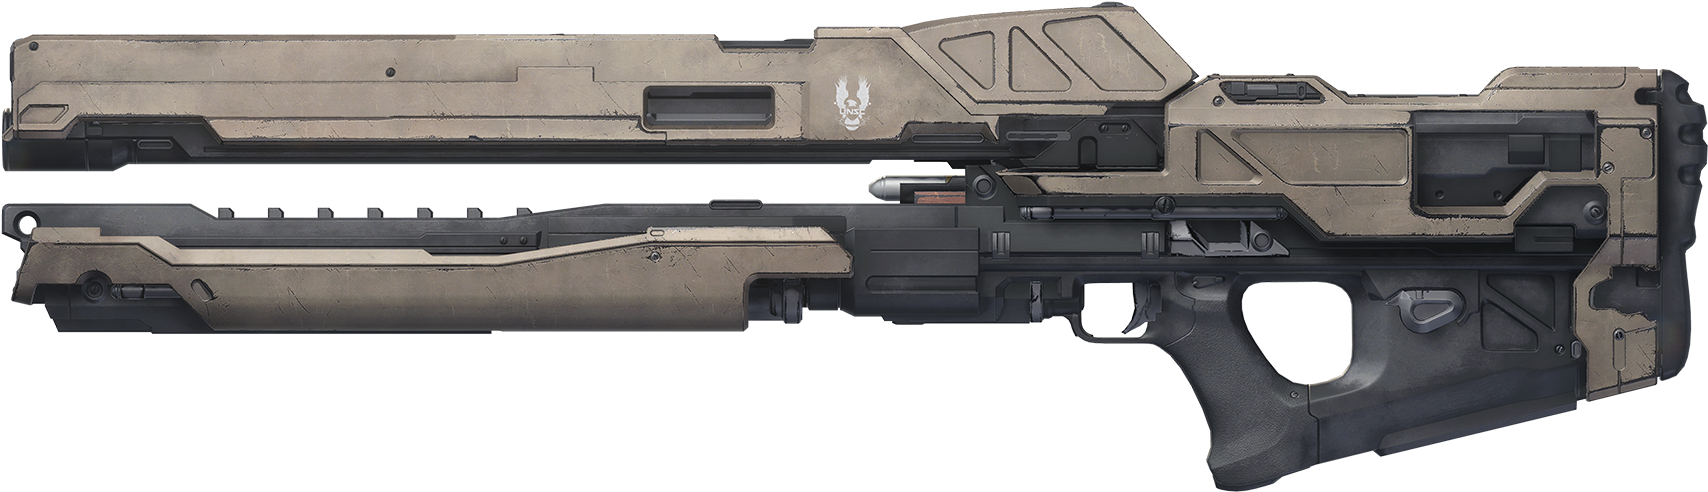 Futuristic Rifle Design PNG image